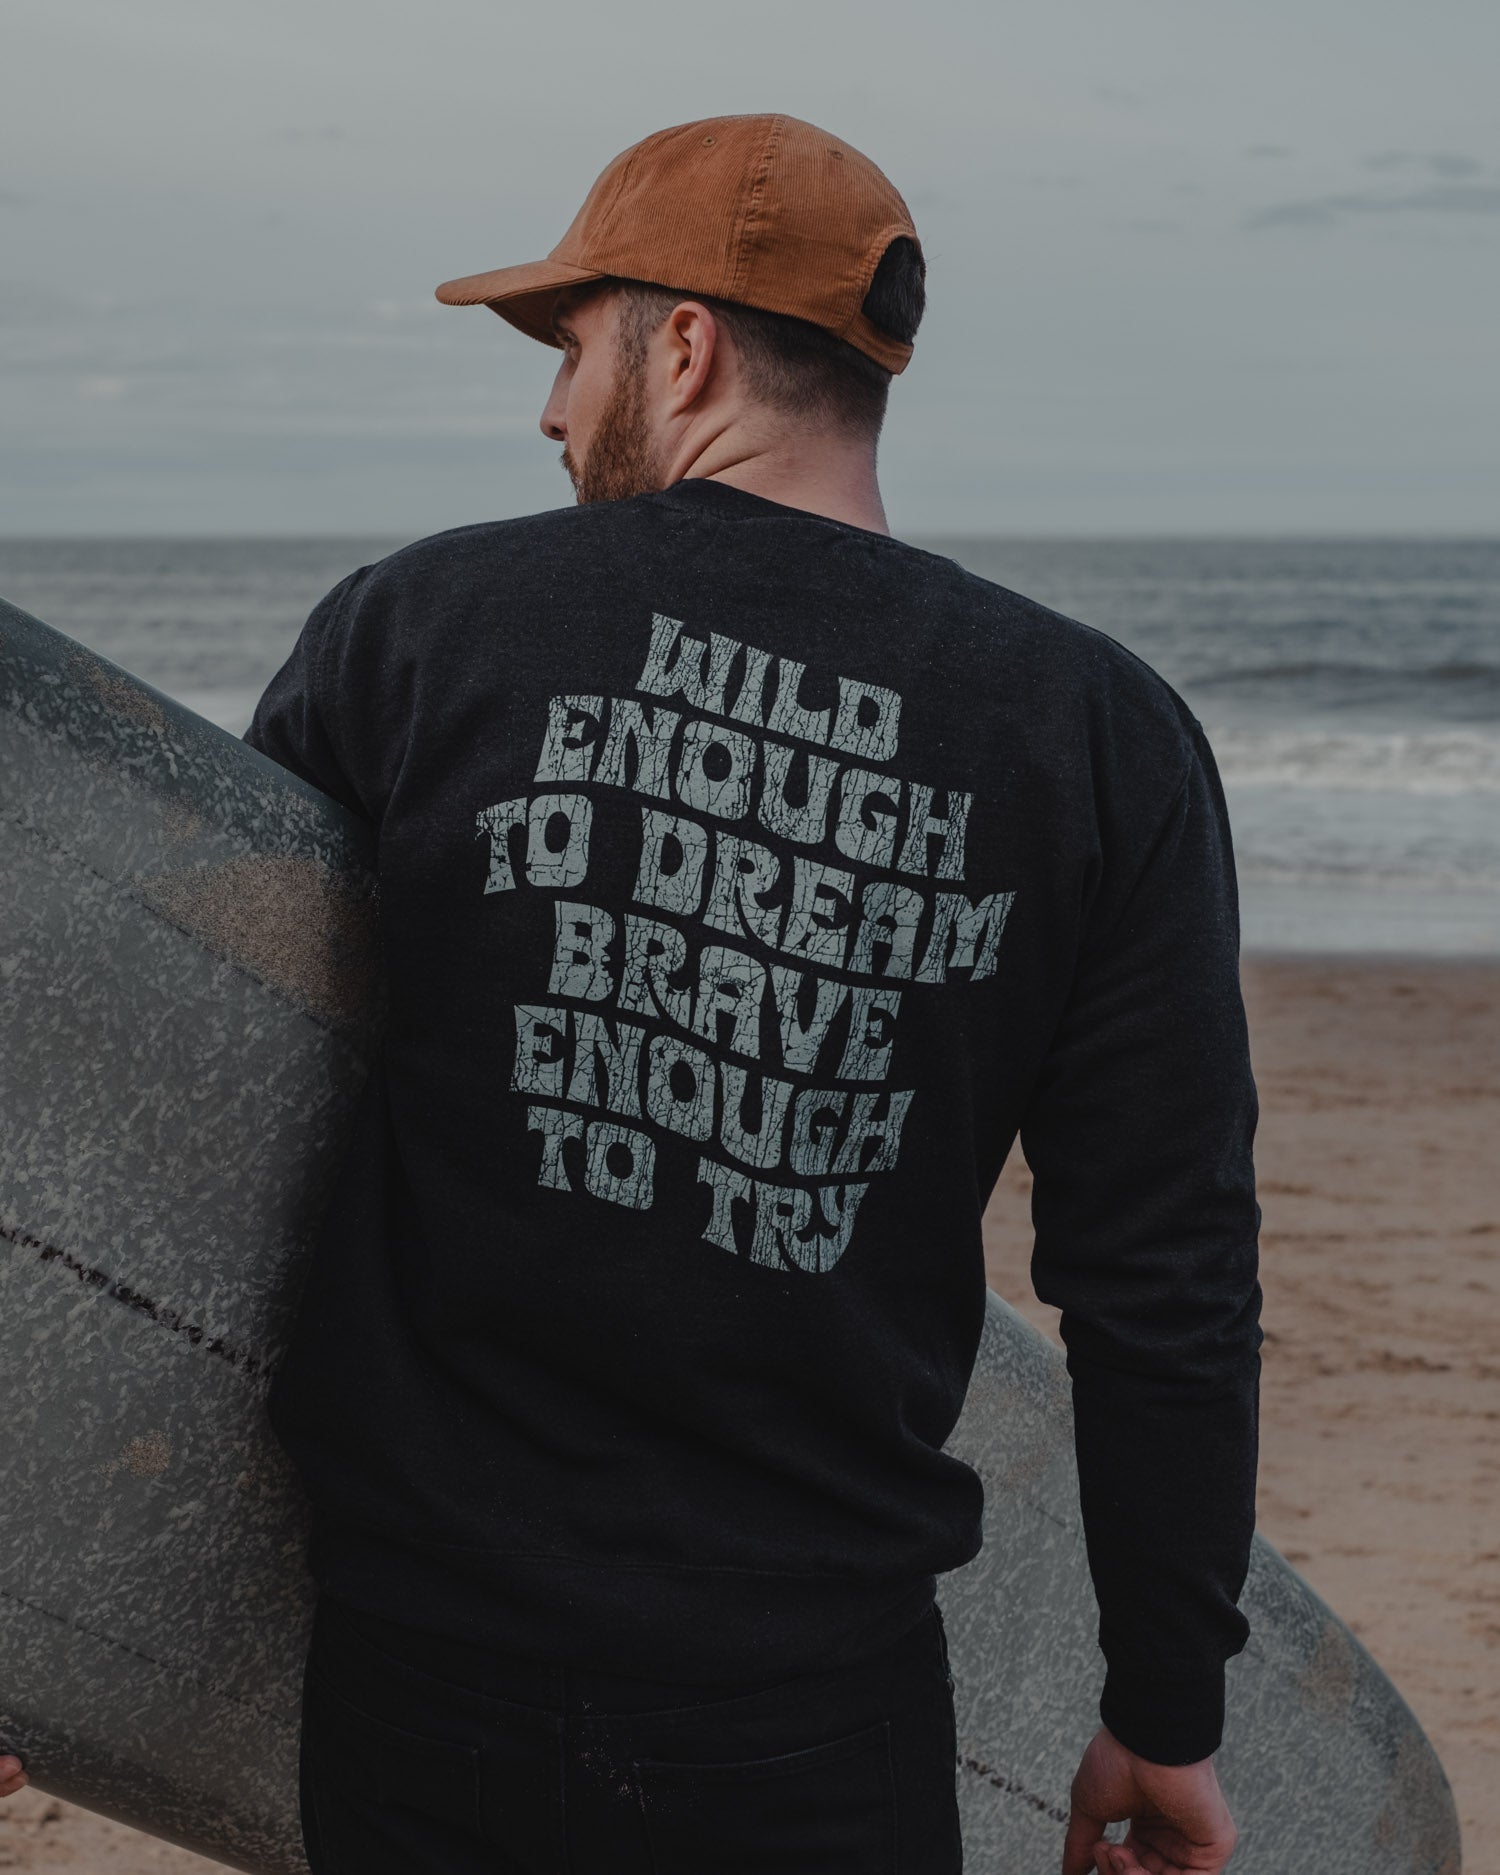 Wild Dreamer Black Sweatshirt with surfer on front by ART DISCO Original Goods